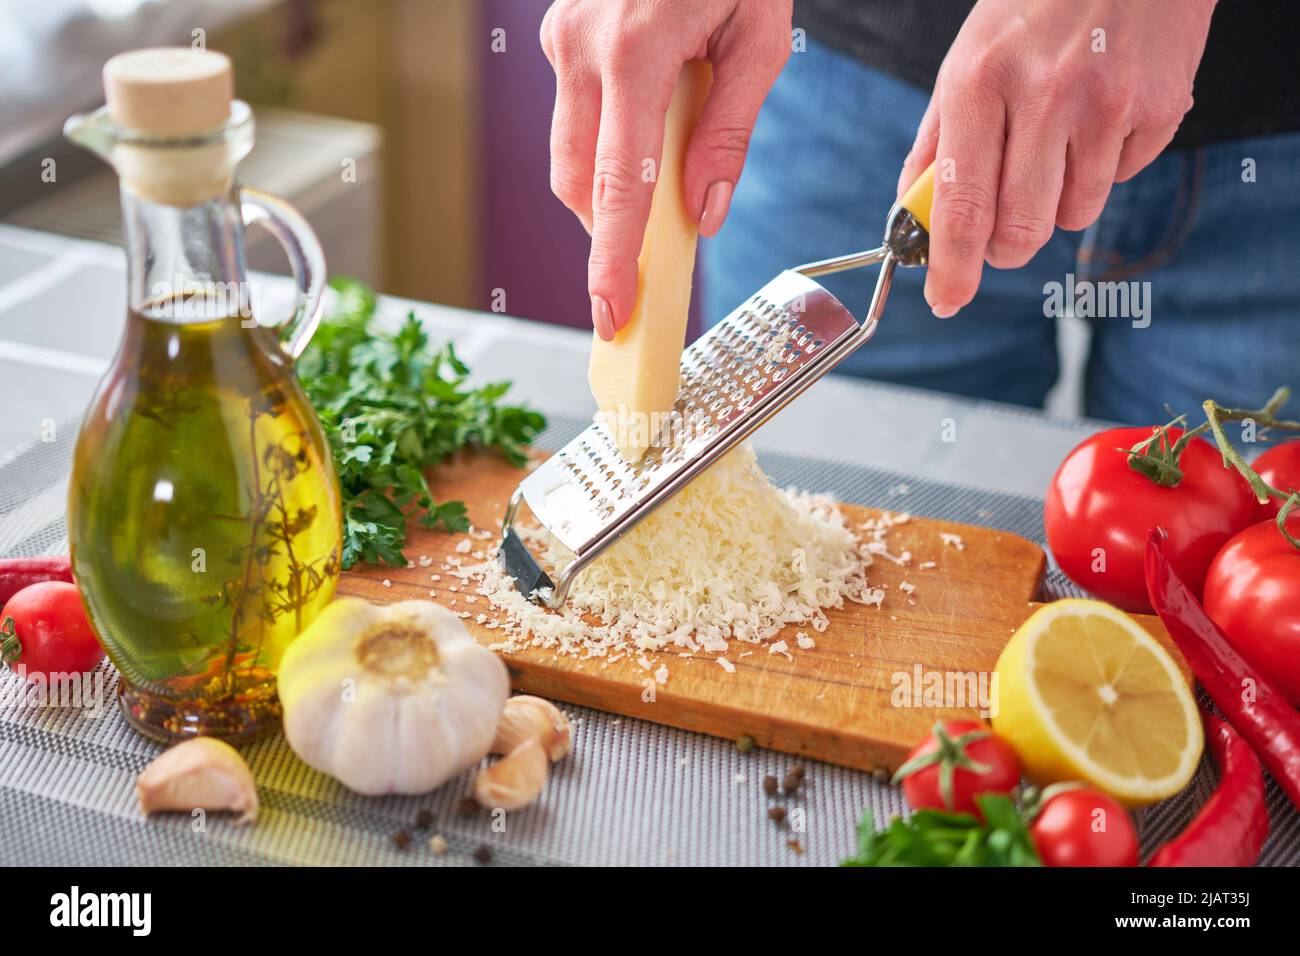 https://c8.alamy.com/comp/2JAT35J/woman-grating-parmesan-cheese-on-a-grater-at-domestic-kitchen-2JAT35J.jpg